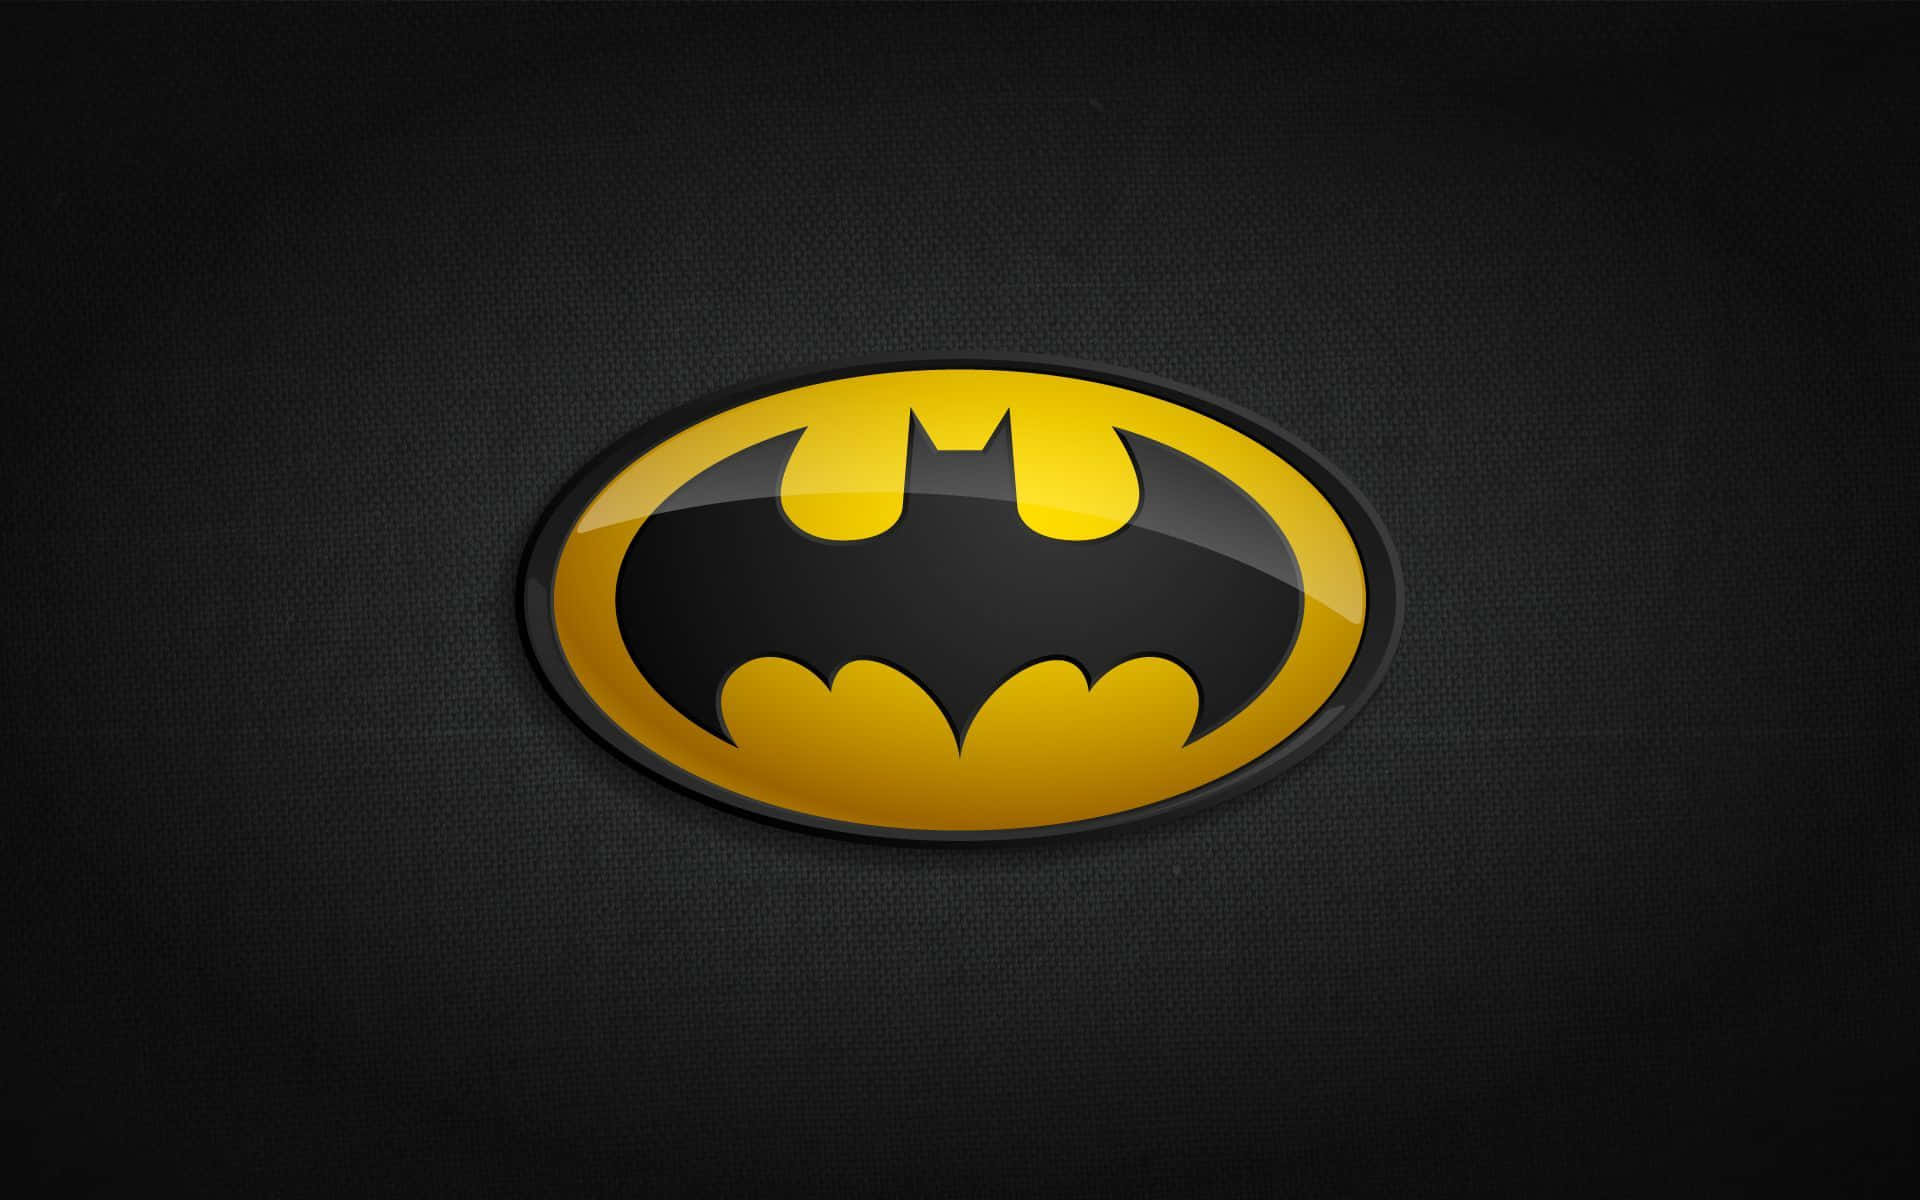 Free Batman Tablet Wallpaper Downloads, [100+] Batman Tablet Wallpapers for  FREE 